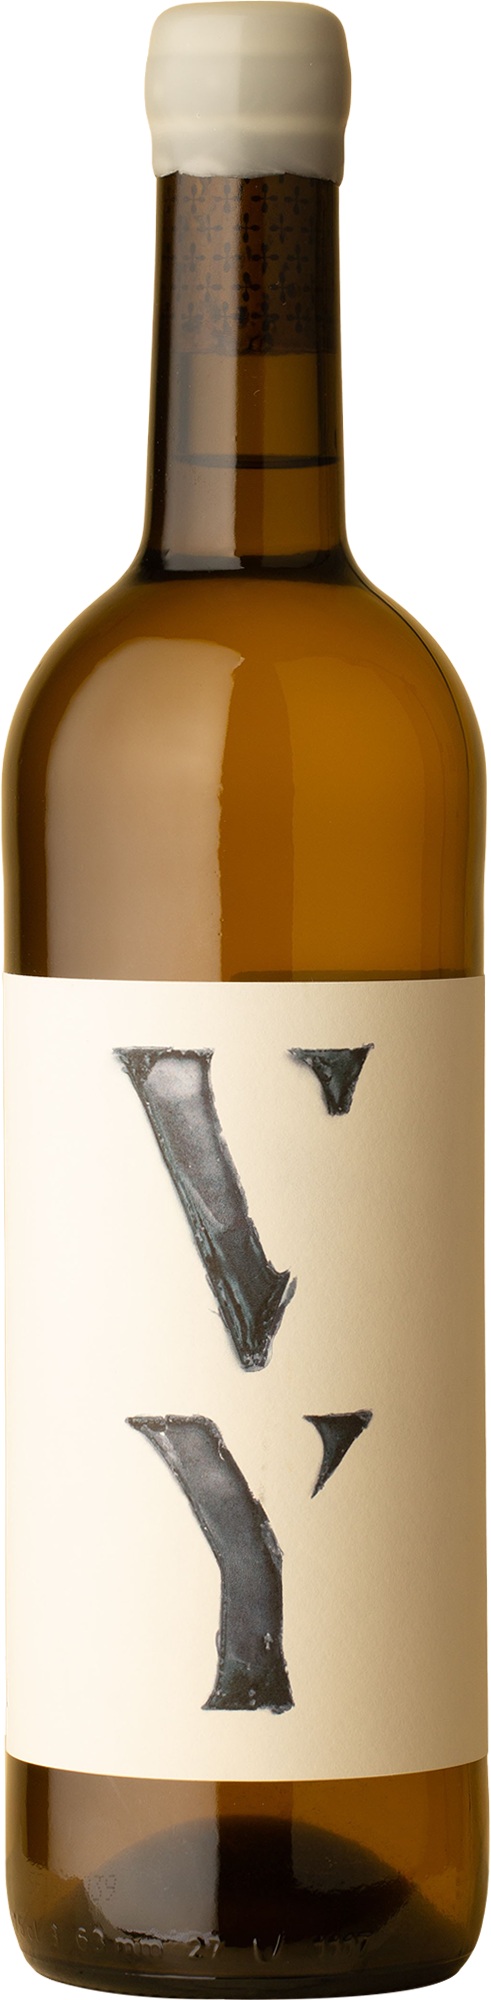 Partida Creus - VY Vinyater 2019 White Wine